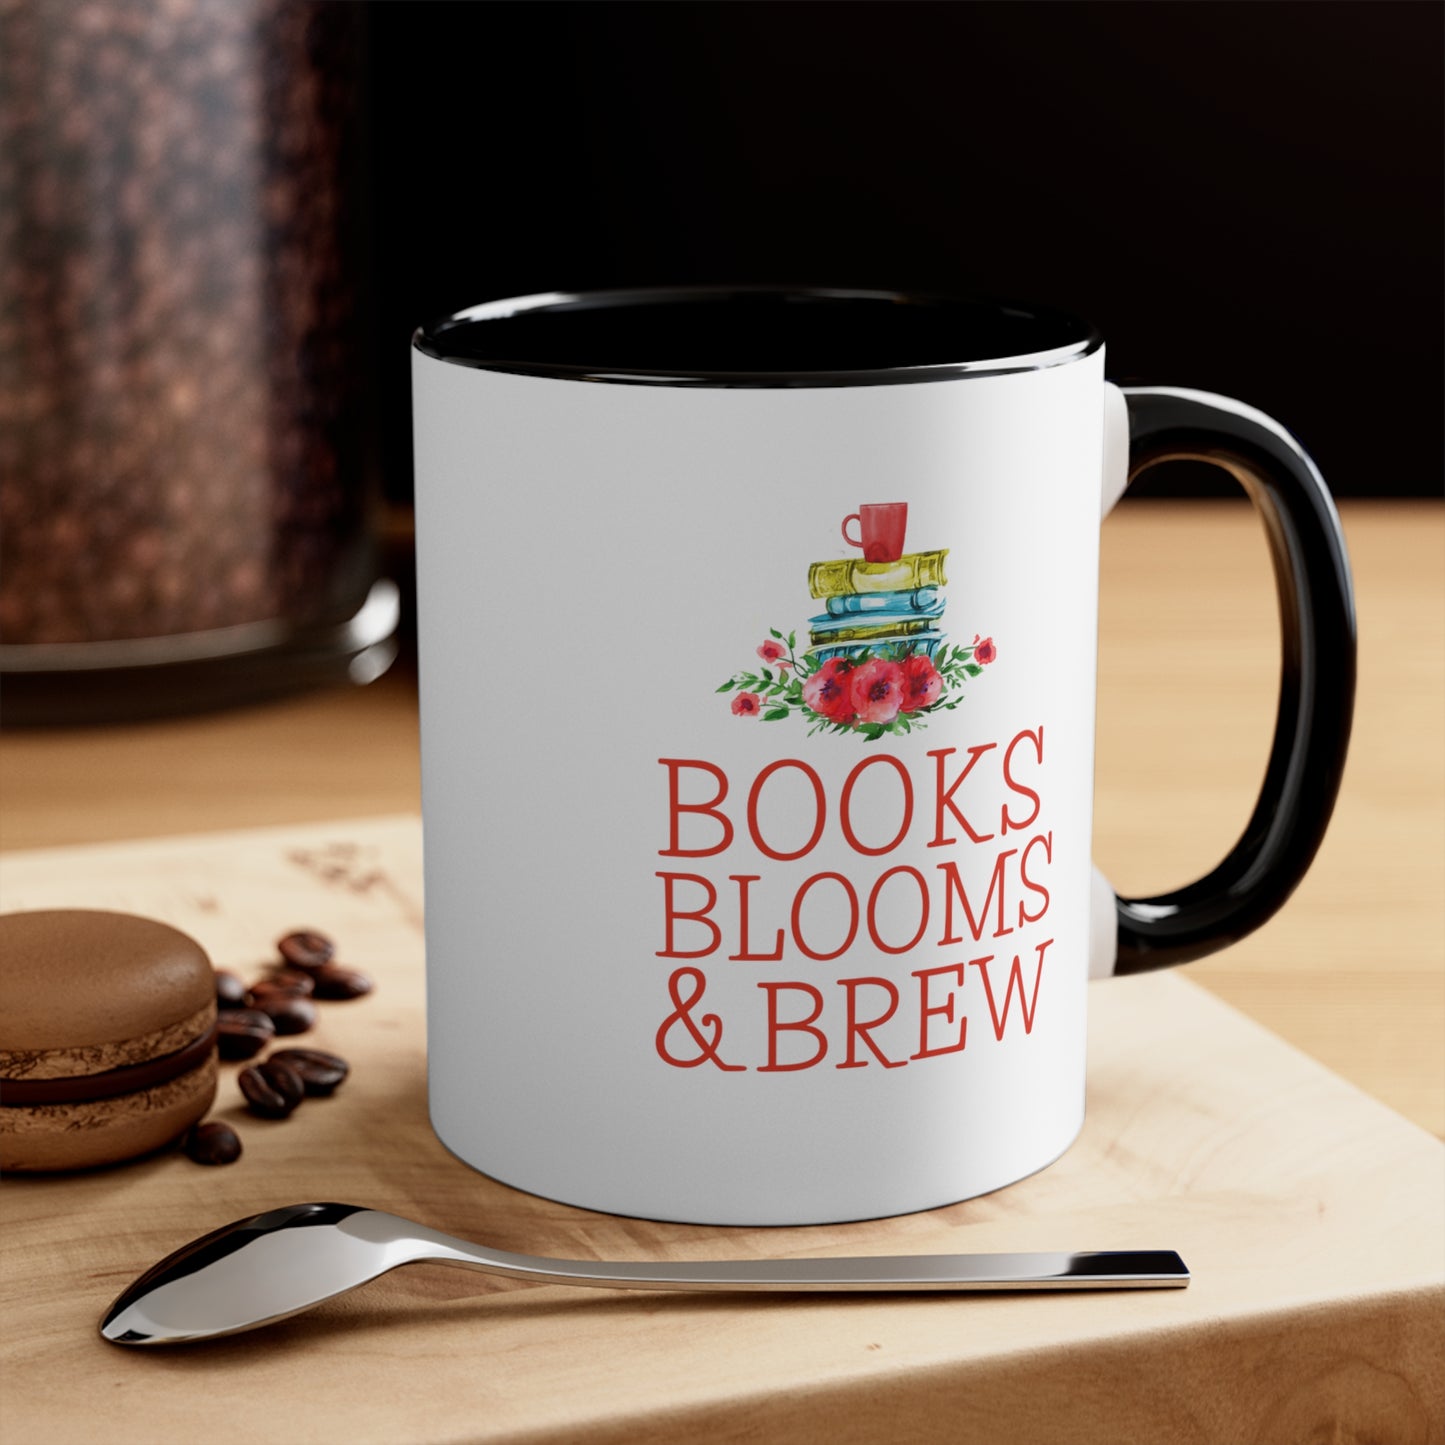 Books, Blooms & Brew Coffee Mug, 11oz - FREE U.S. SHIPPING